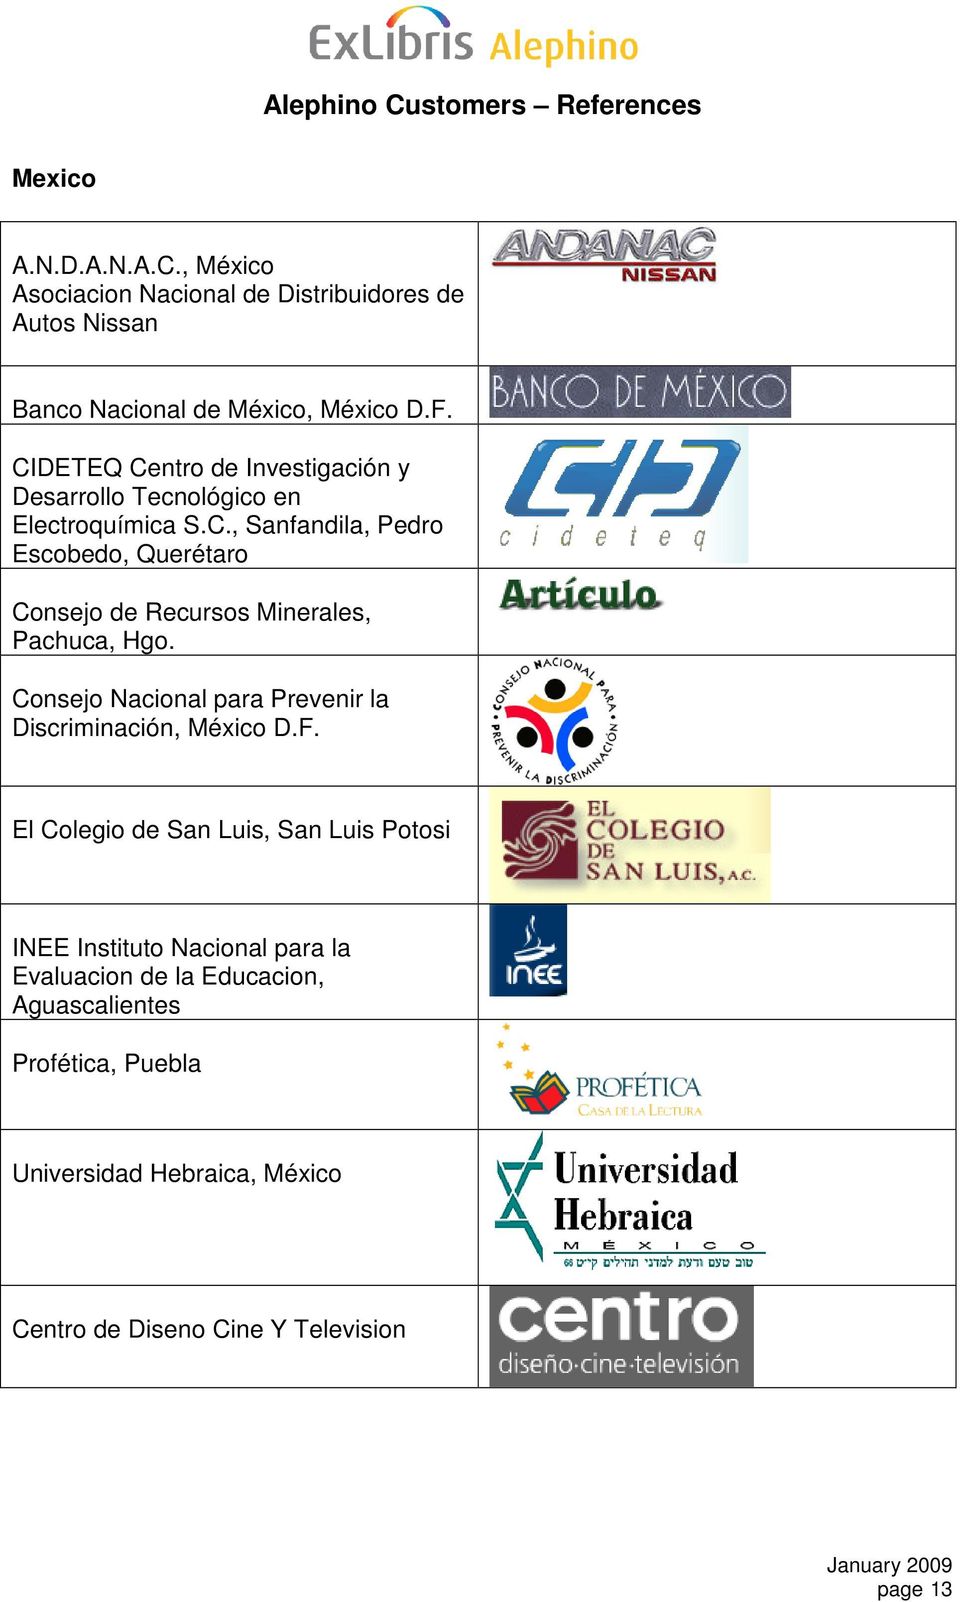 Consejo Nacional para Prevenir la Discriminación, México D.F.